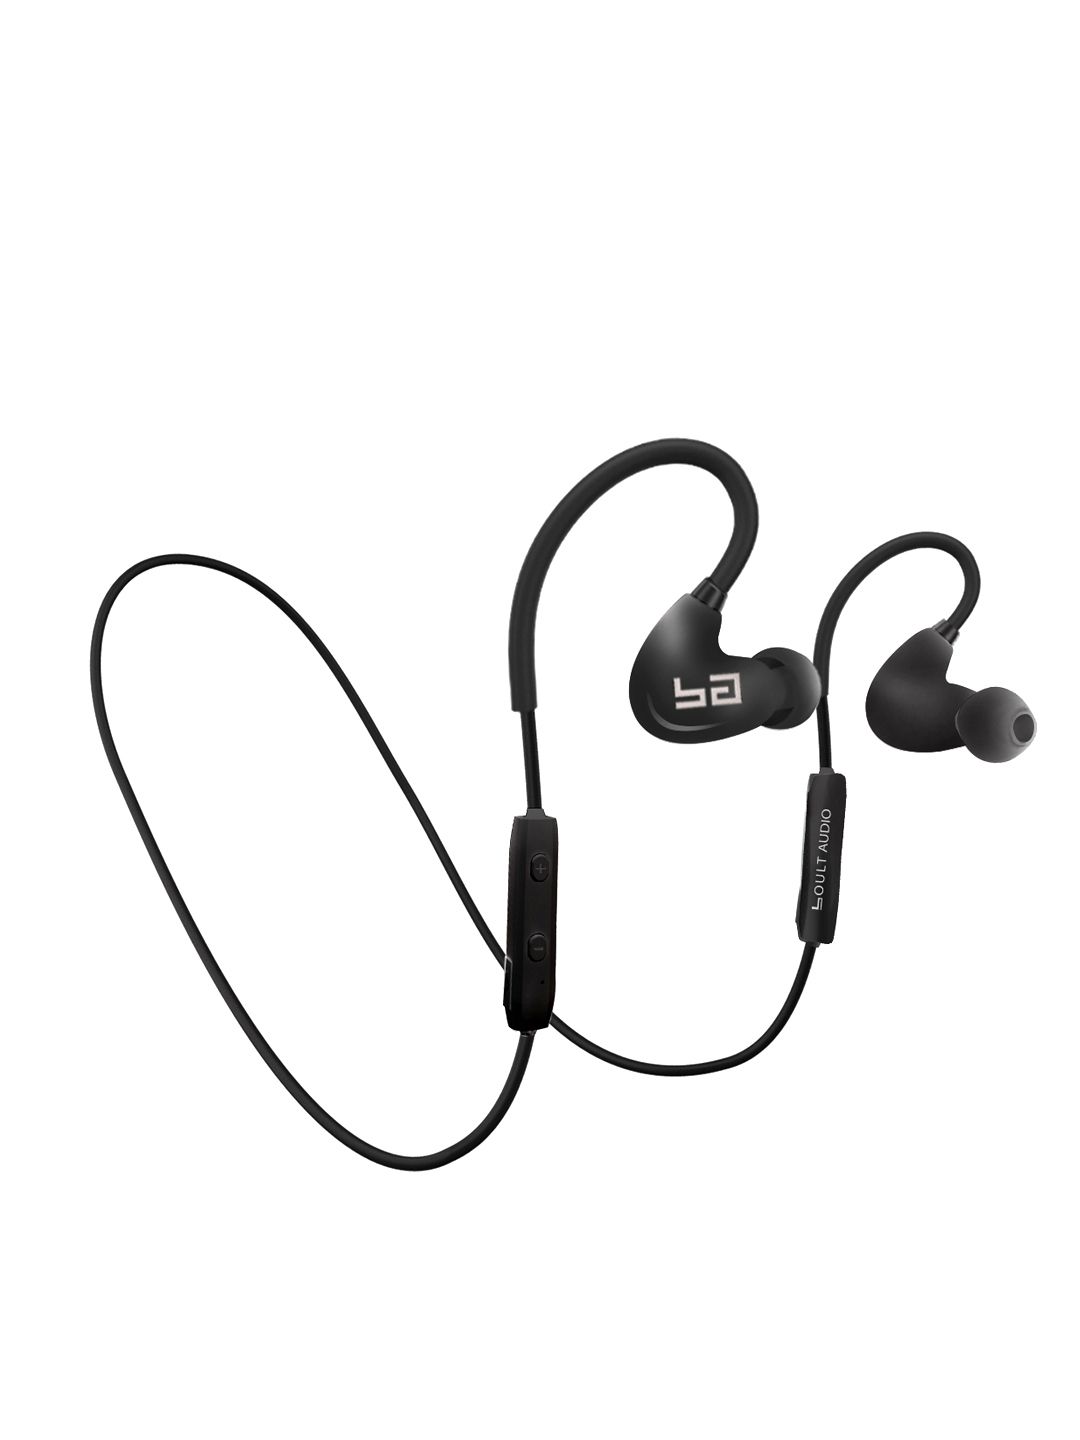 Boult Audio Black StormX Wireless Around-Ear HD Headphones with Mic BA-STORMX1 Price in India